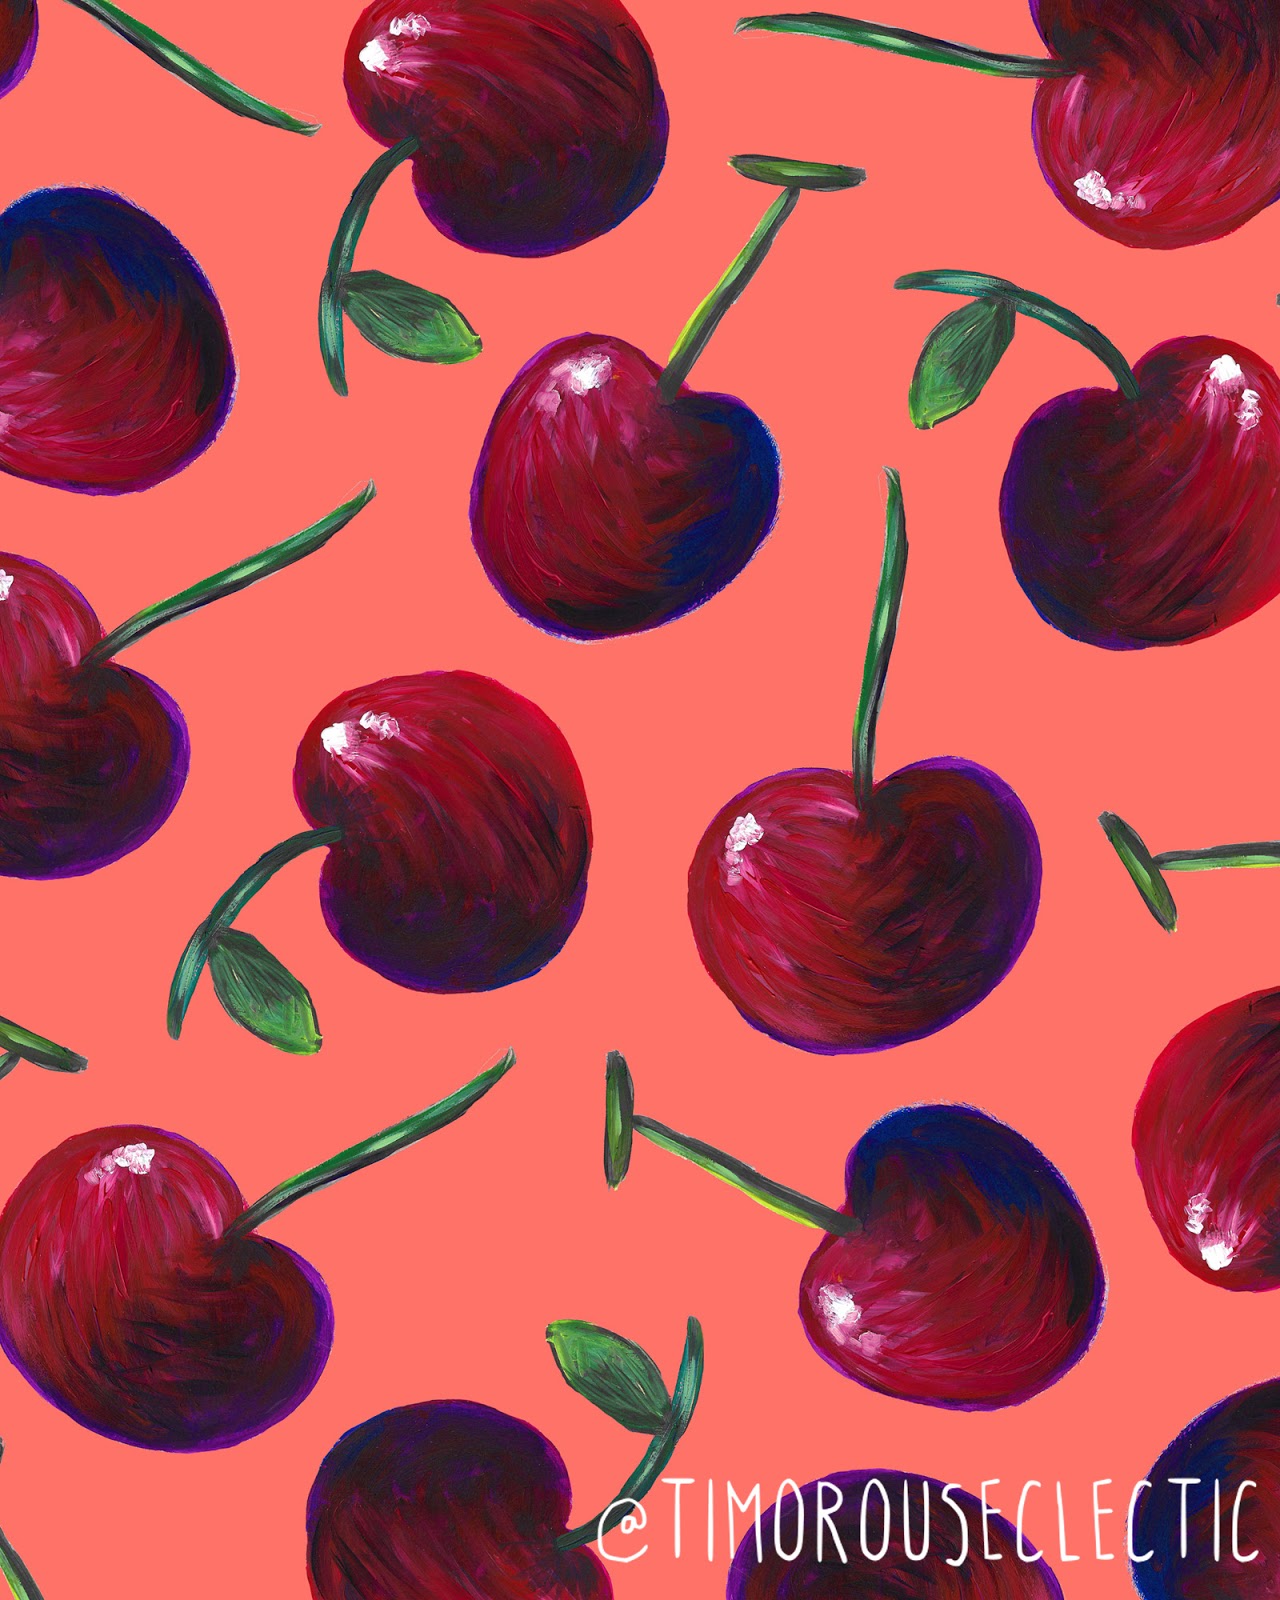 acrlyic painted cherry print